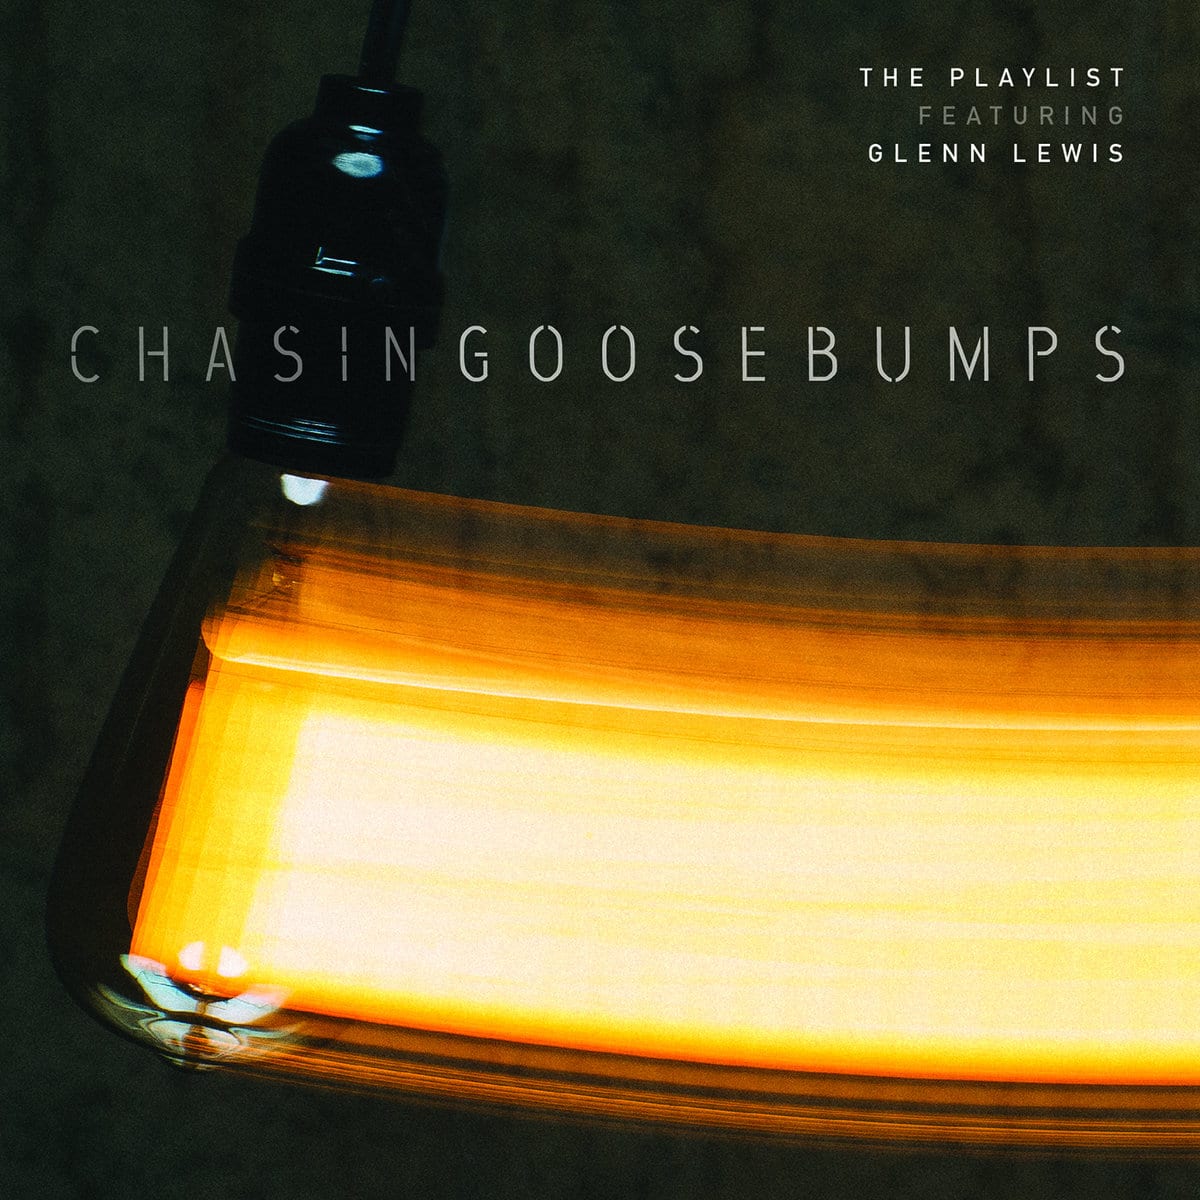 DJ Jazzy Jeff & The PLAYlist - "Chasing Goosebumps" (Release)